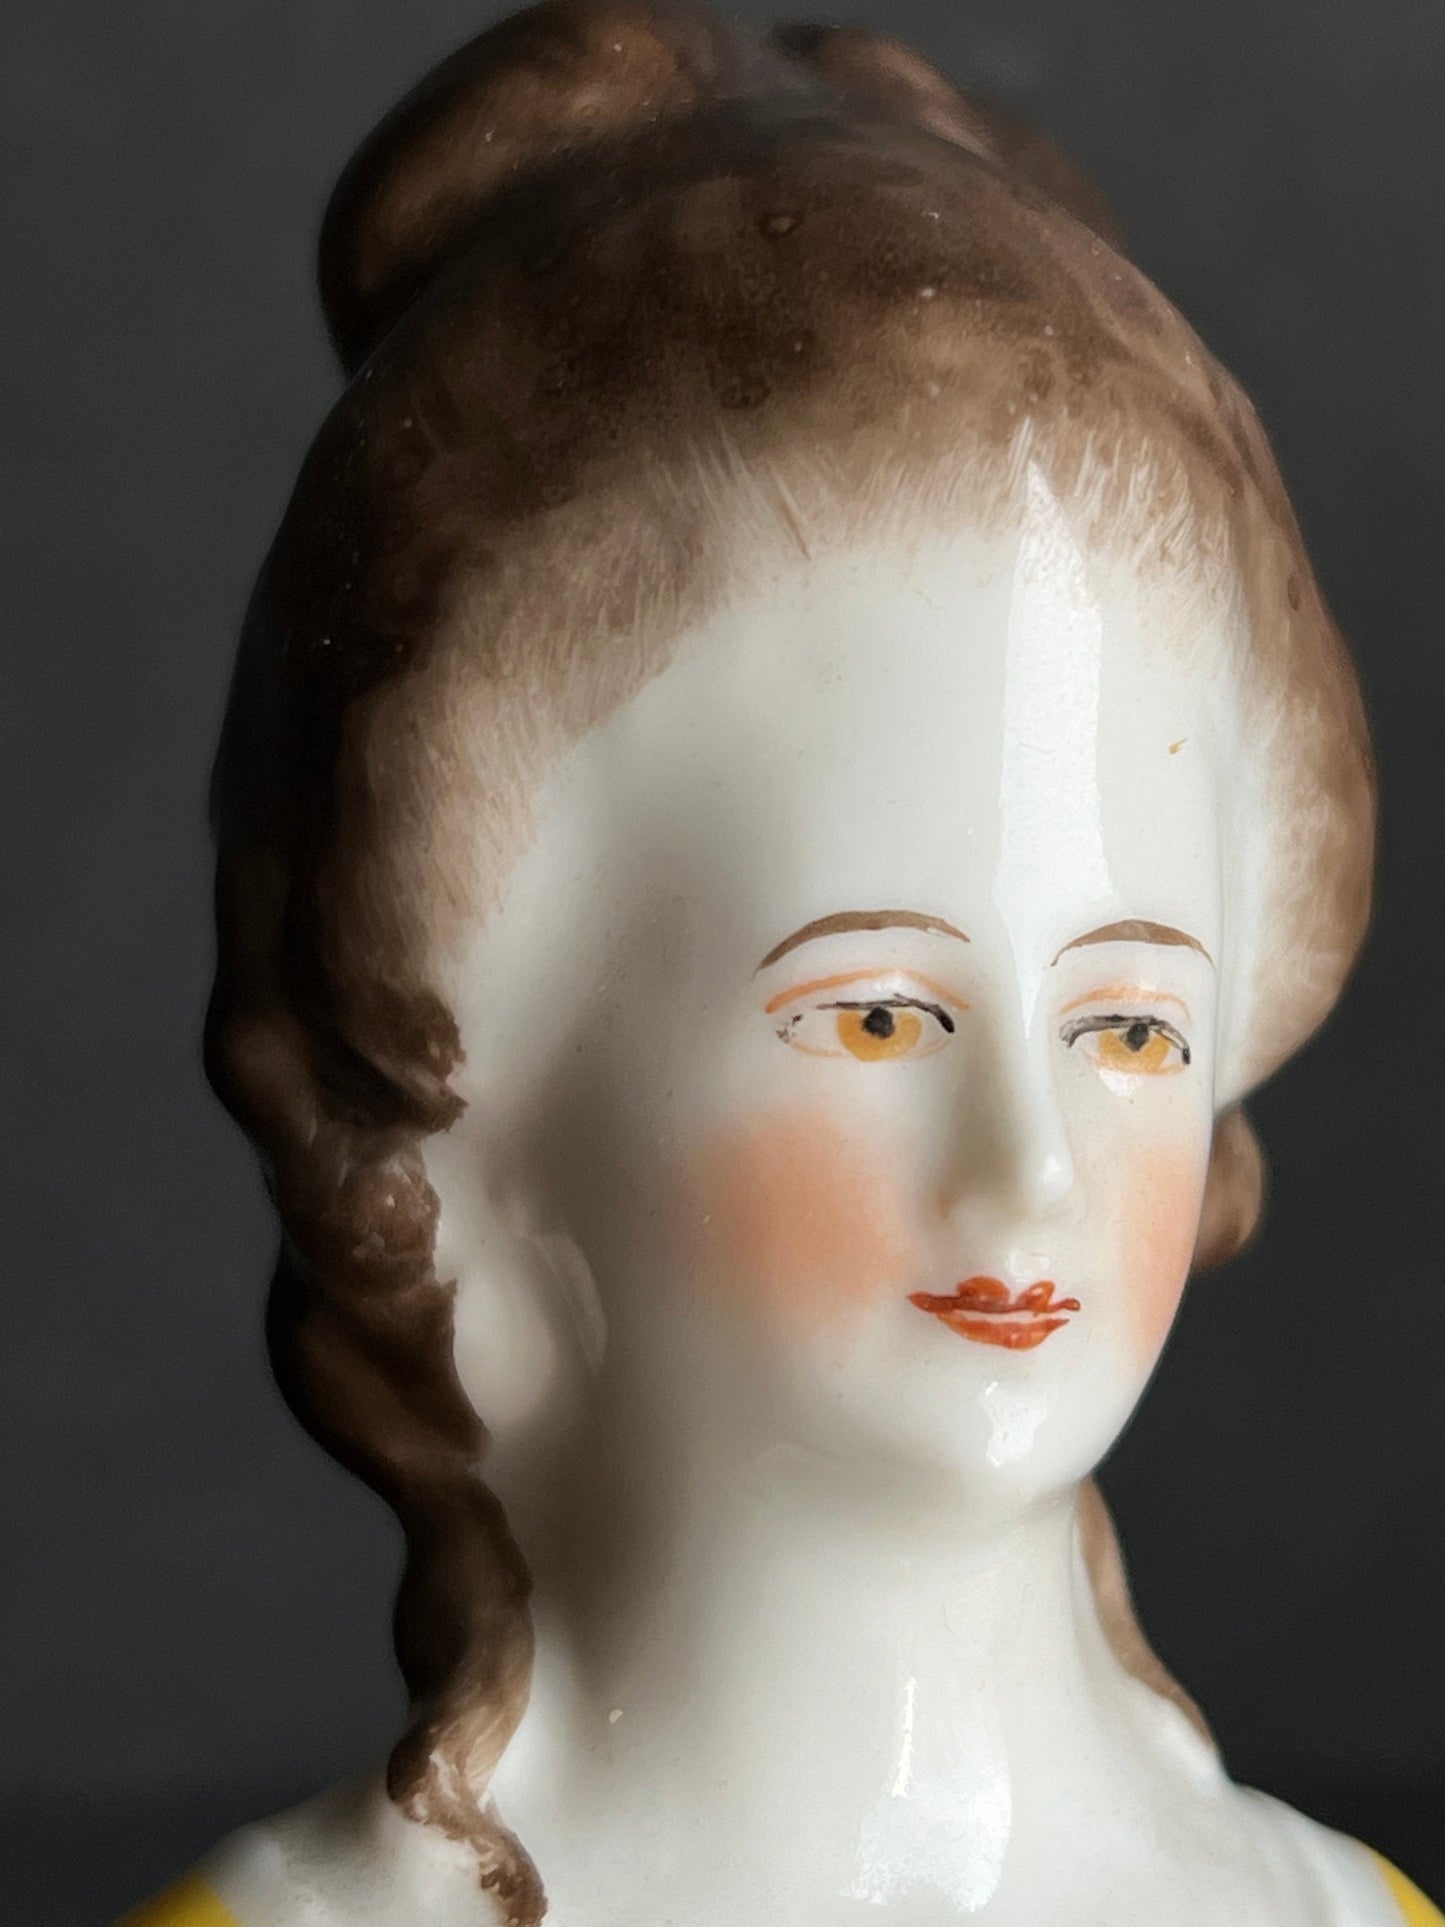 Antique German 5" Porcelain Marked Volkstedt Rudolstadt Half Doll Figurine